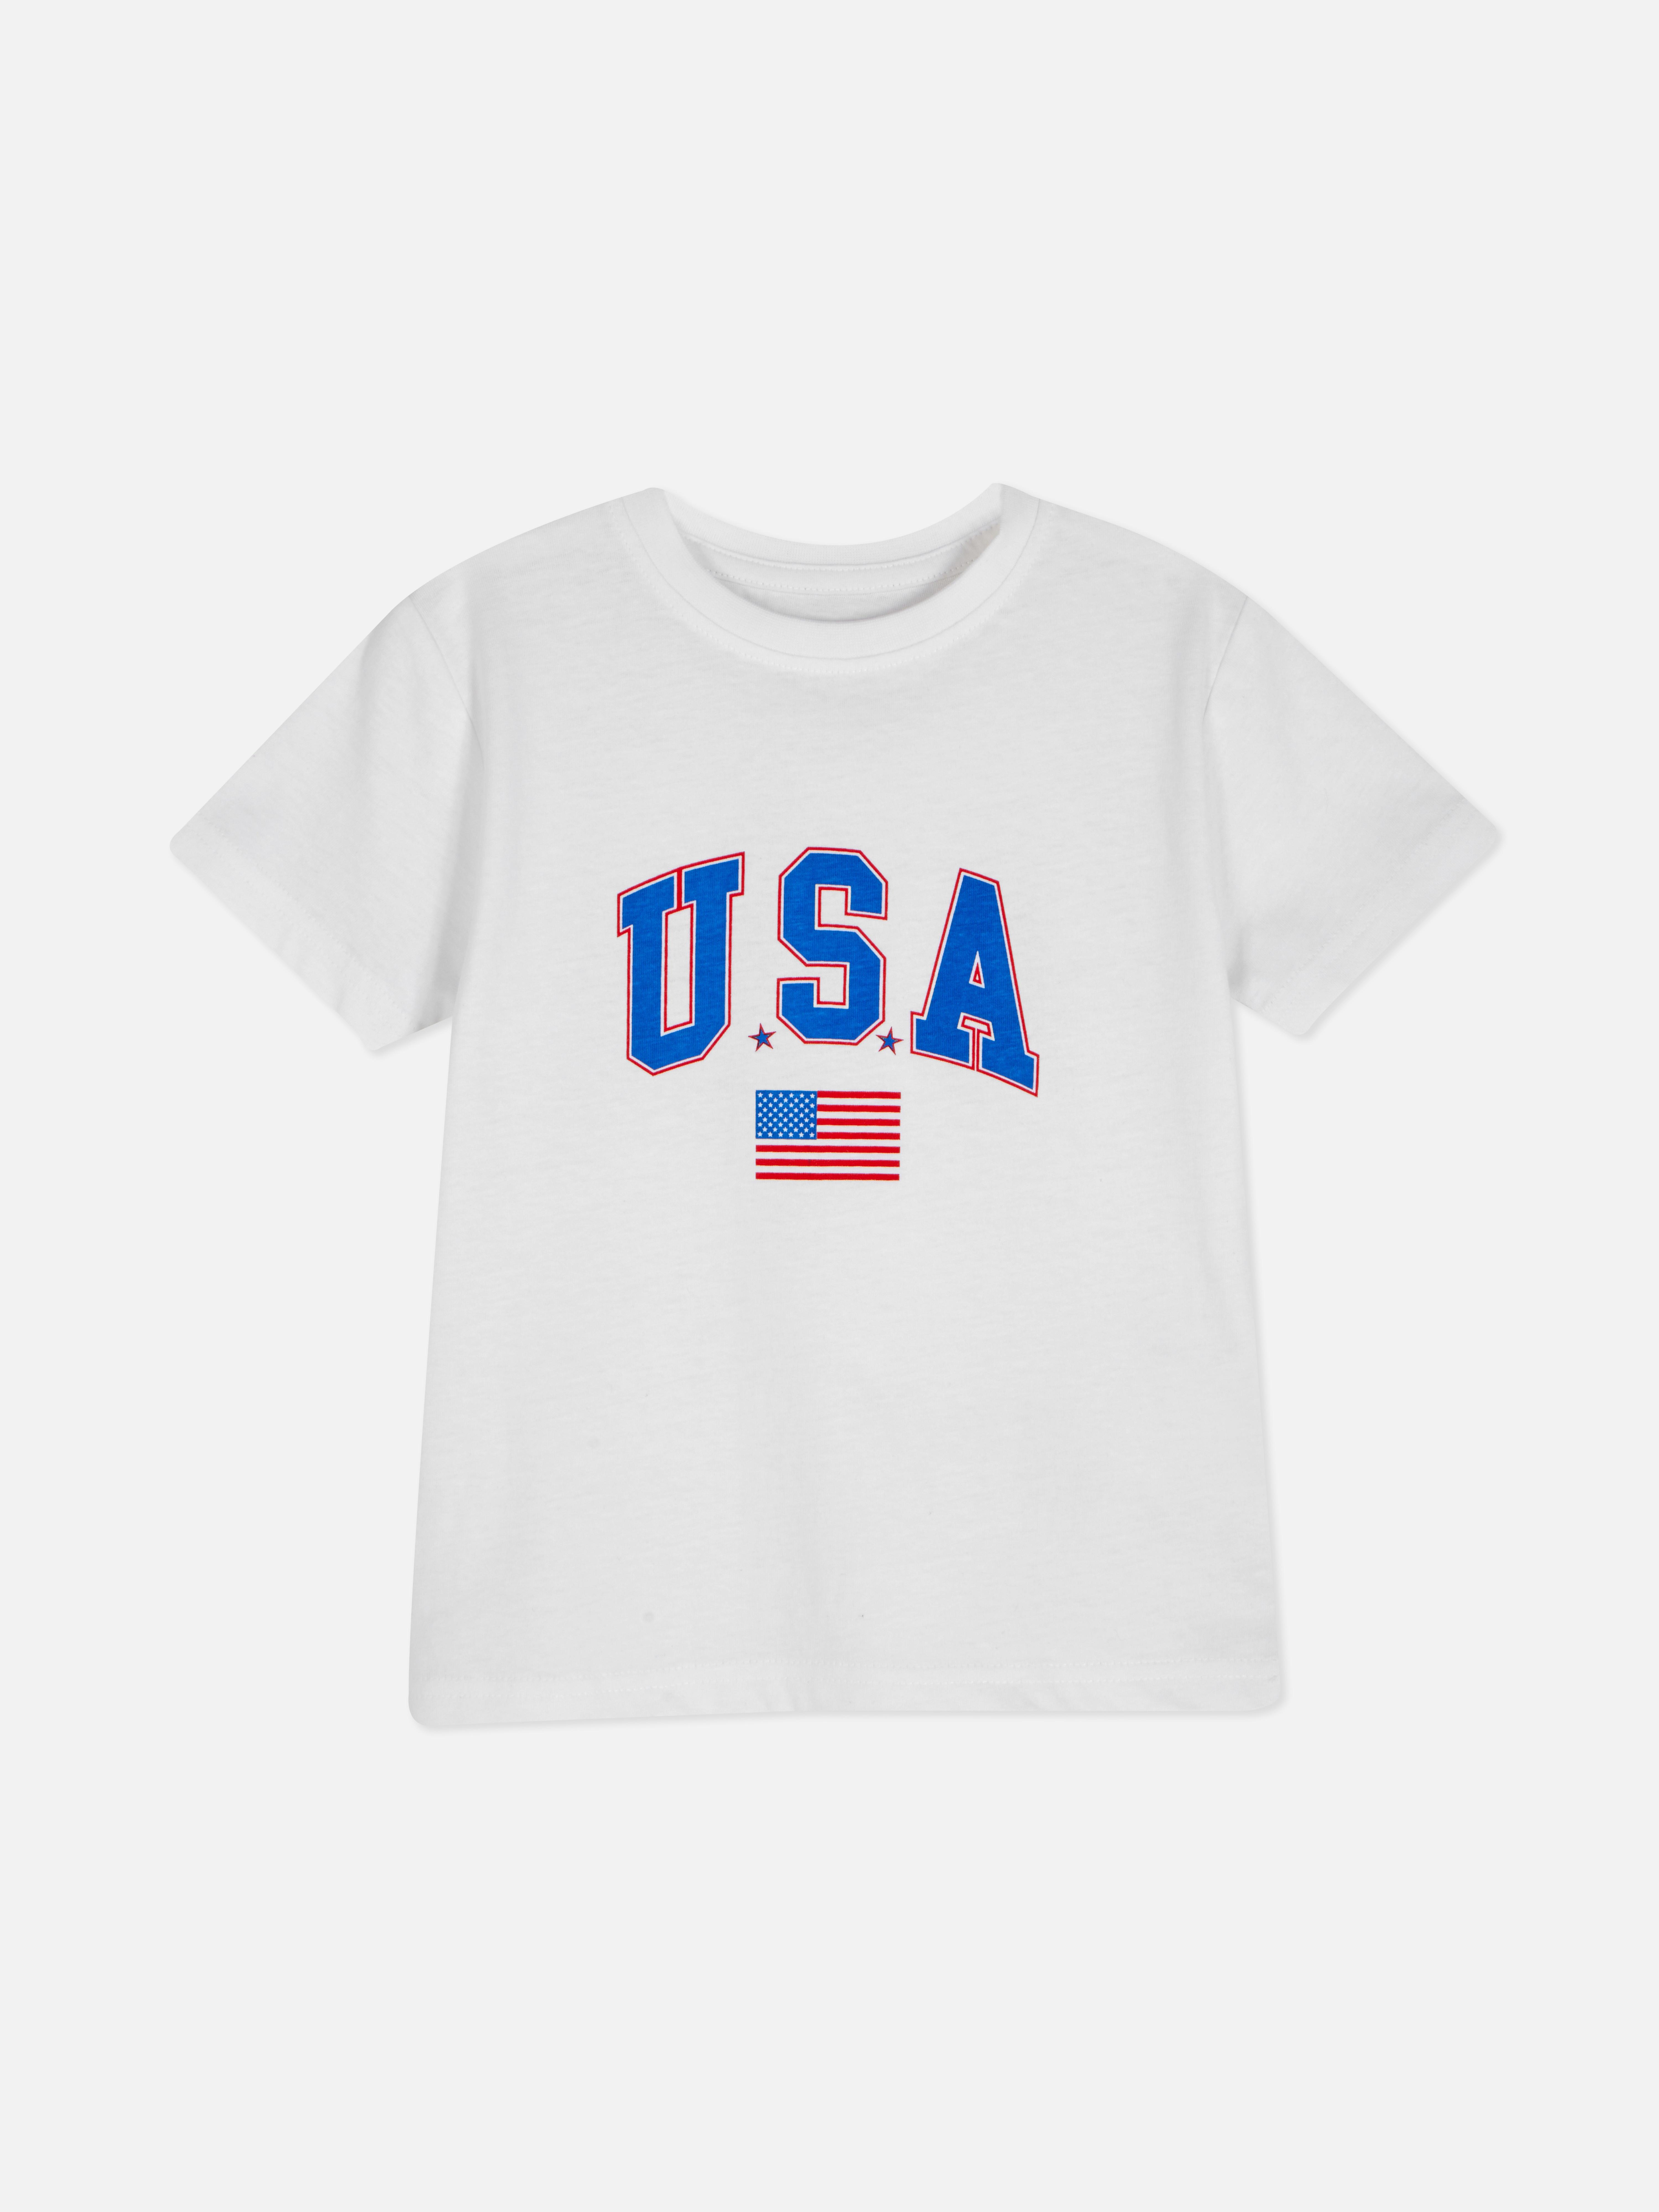 4th of July USA T-shirt